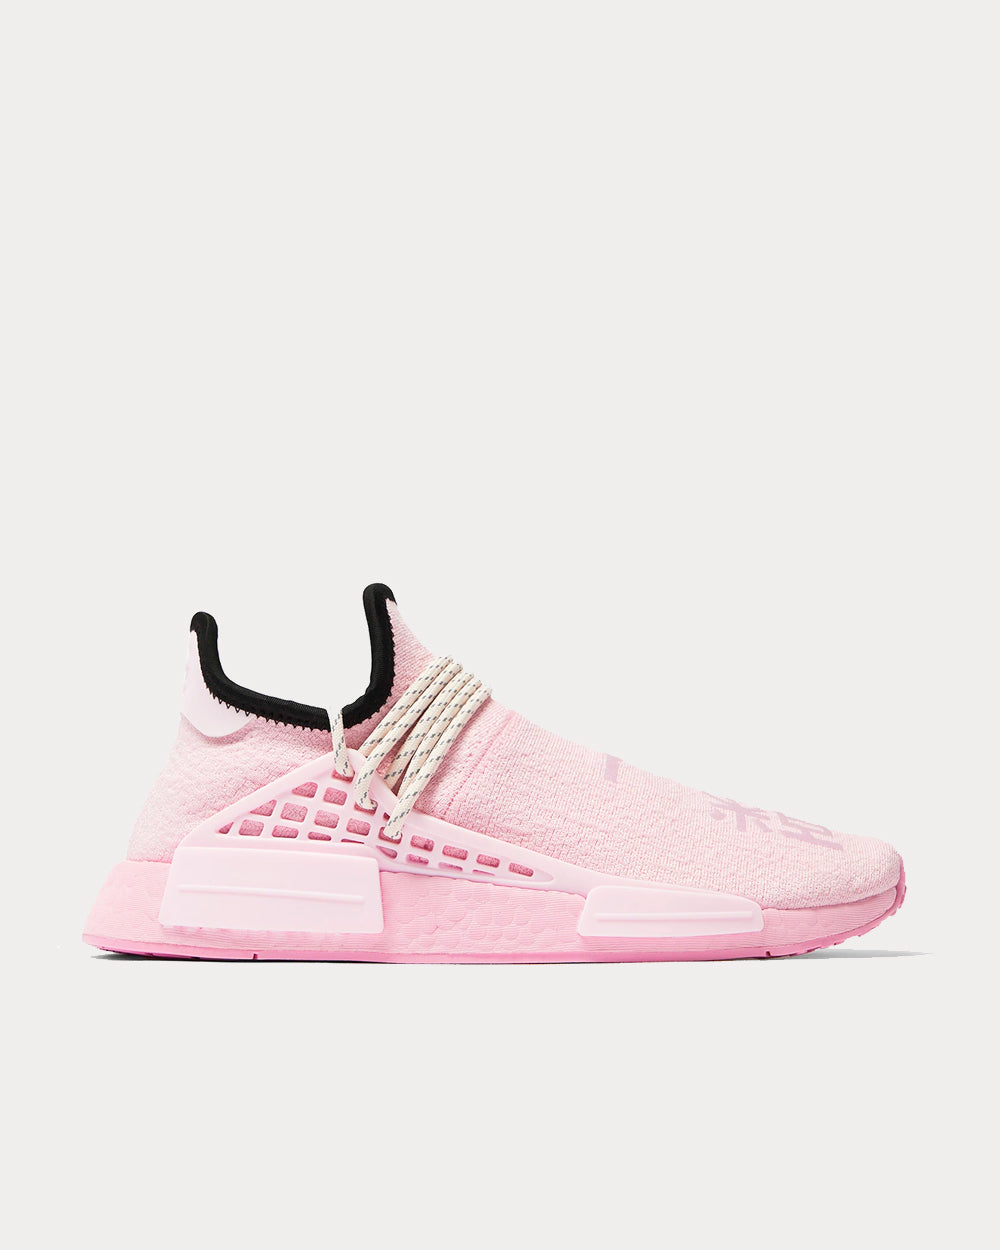 Adidas x Pharrell Williams - HU NMD True Pink, Clear Pink & Black Low Top Sneakers